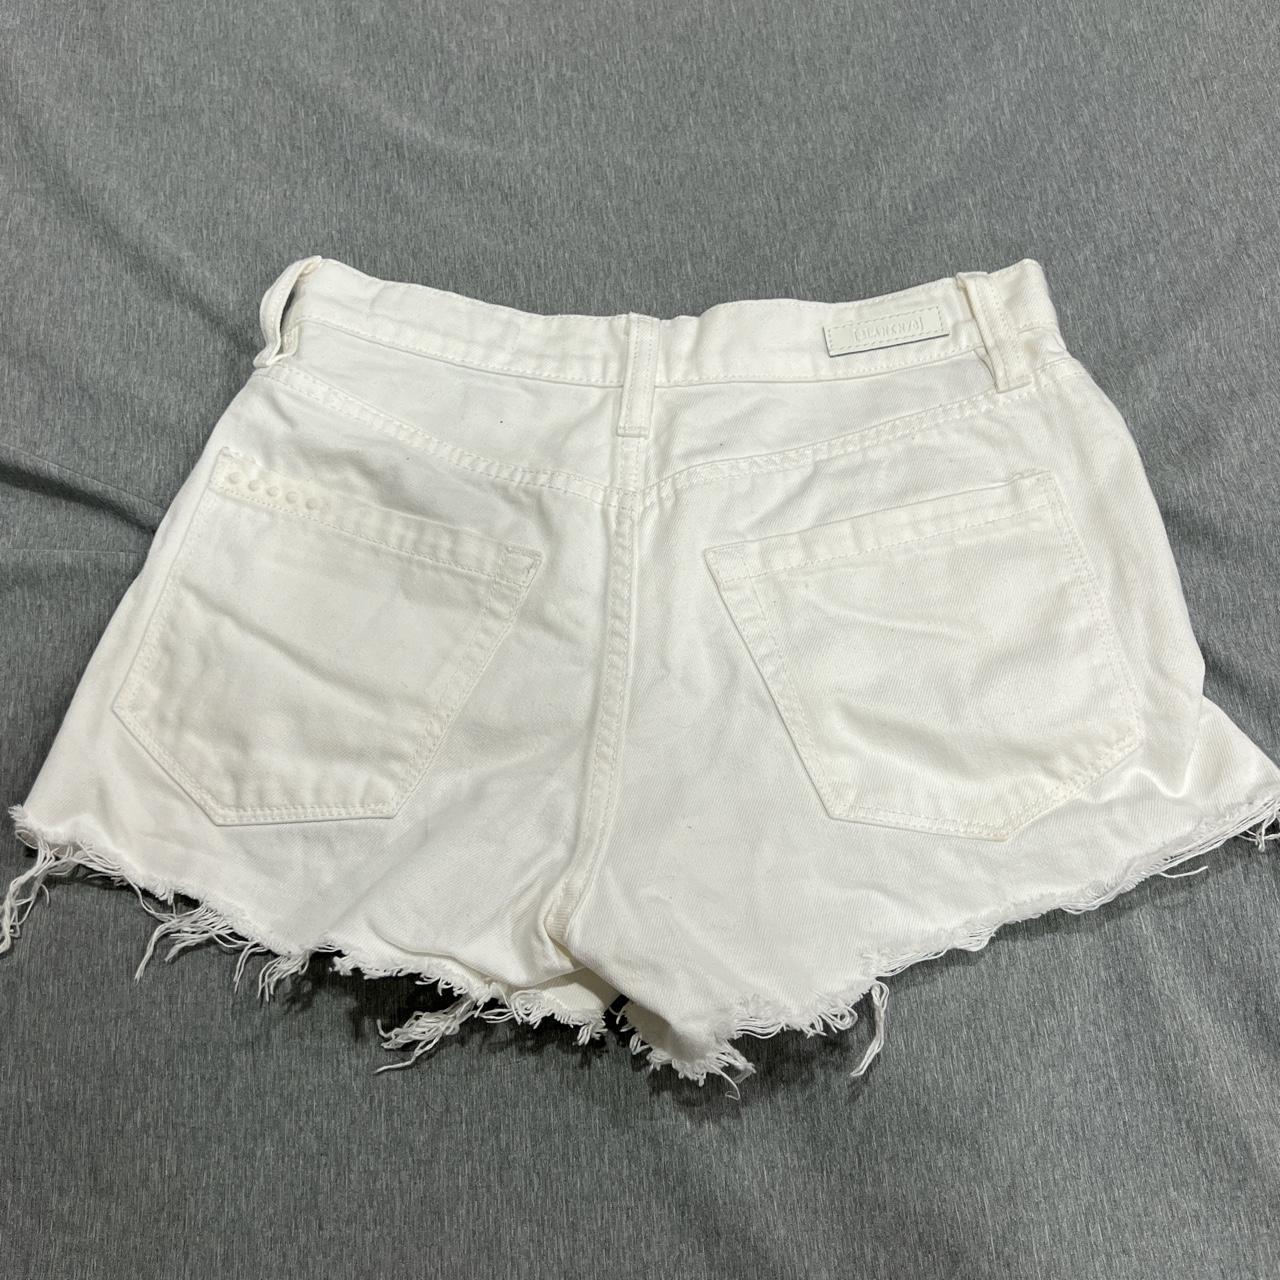 BLANKNYC white ripped Jean shorts - Depop